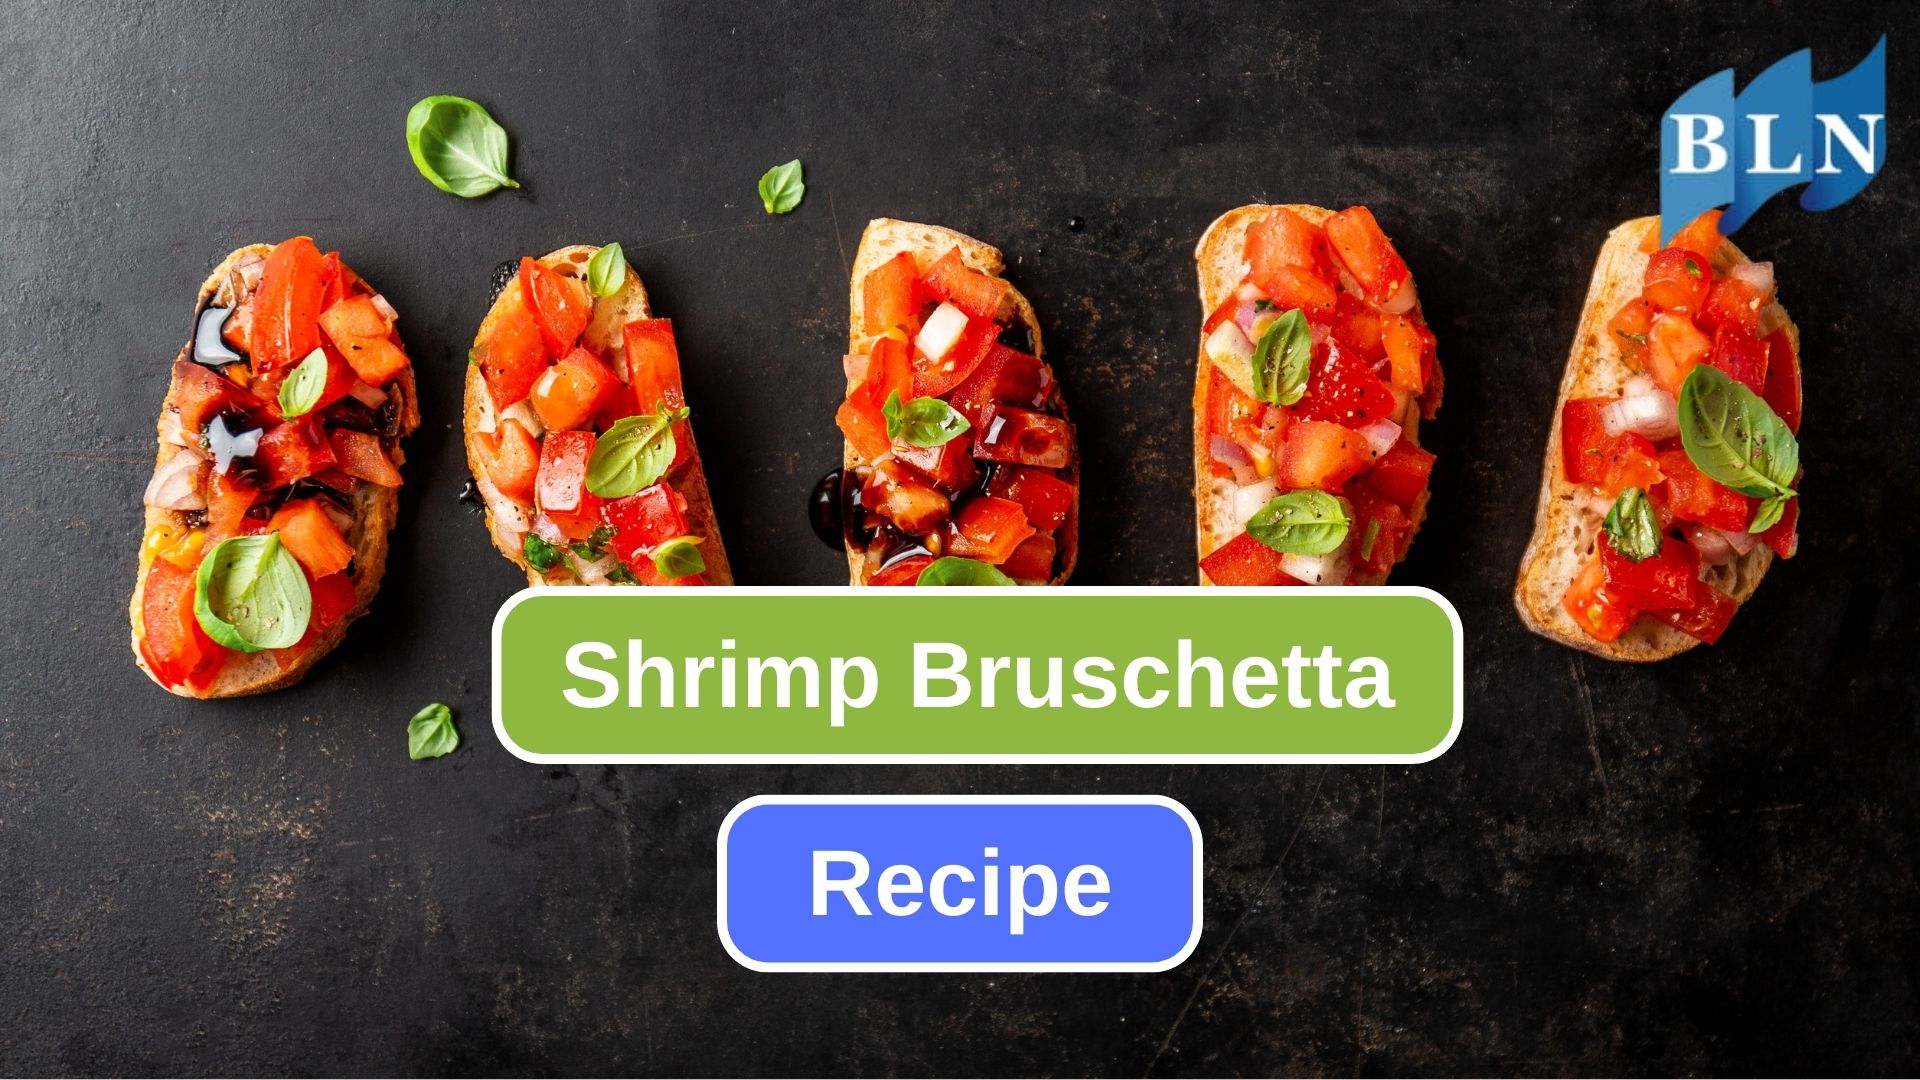 Here Are Shrimp Bruschetta Recipe You Should Try